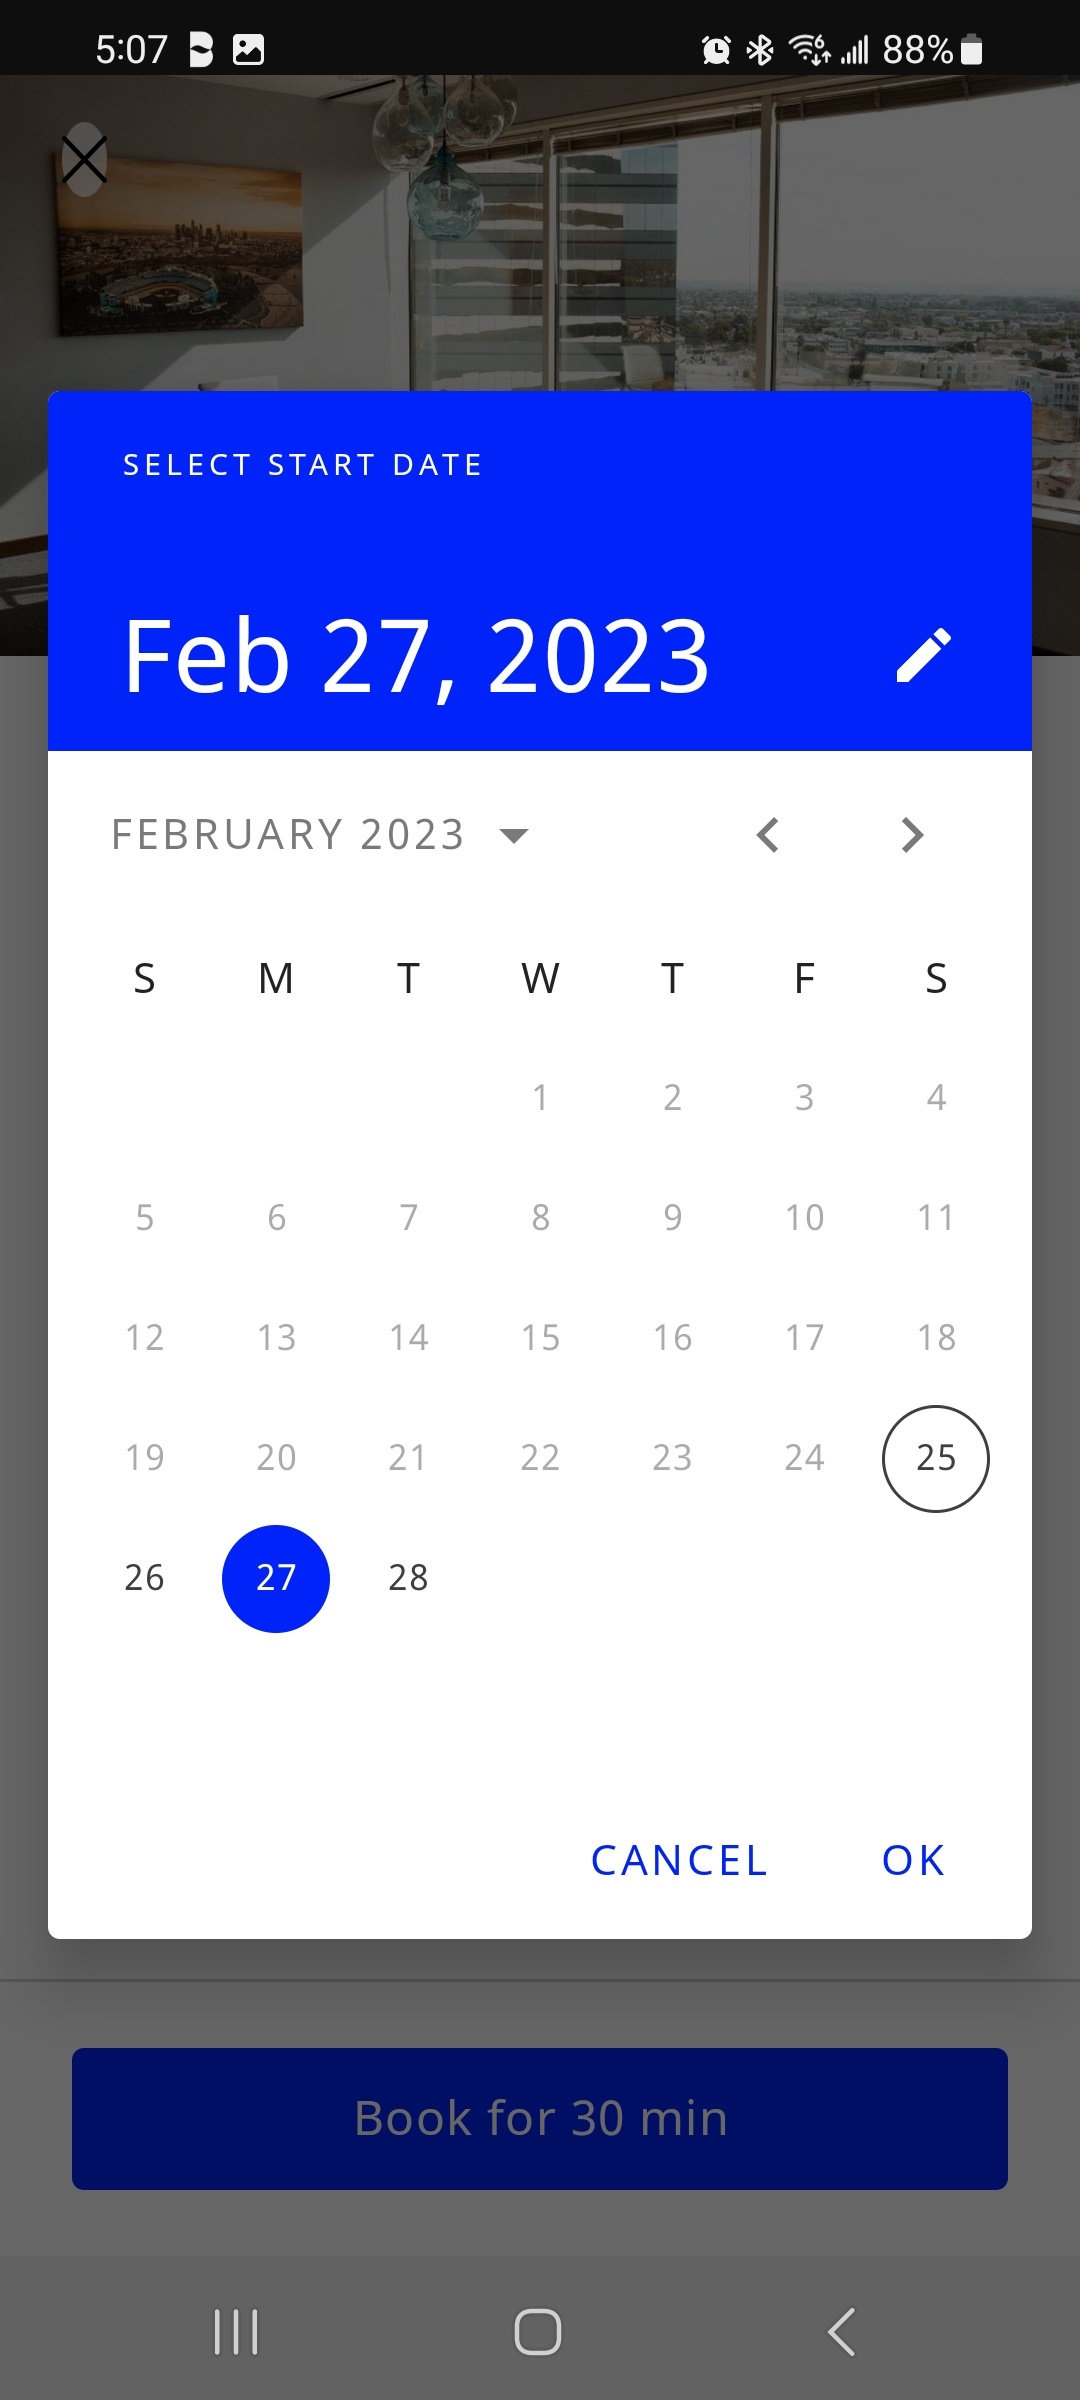 TEEM Mobile Calendar Book Office Future Change Date.jpg